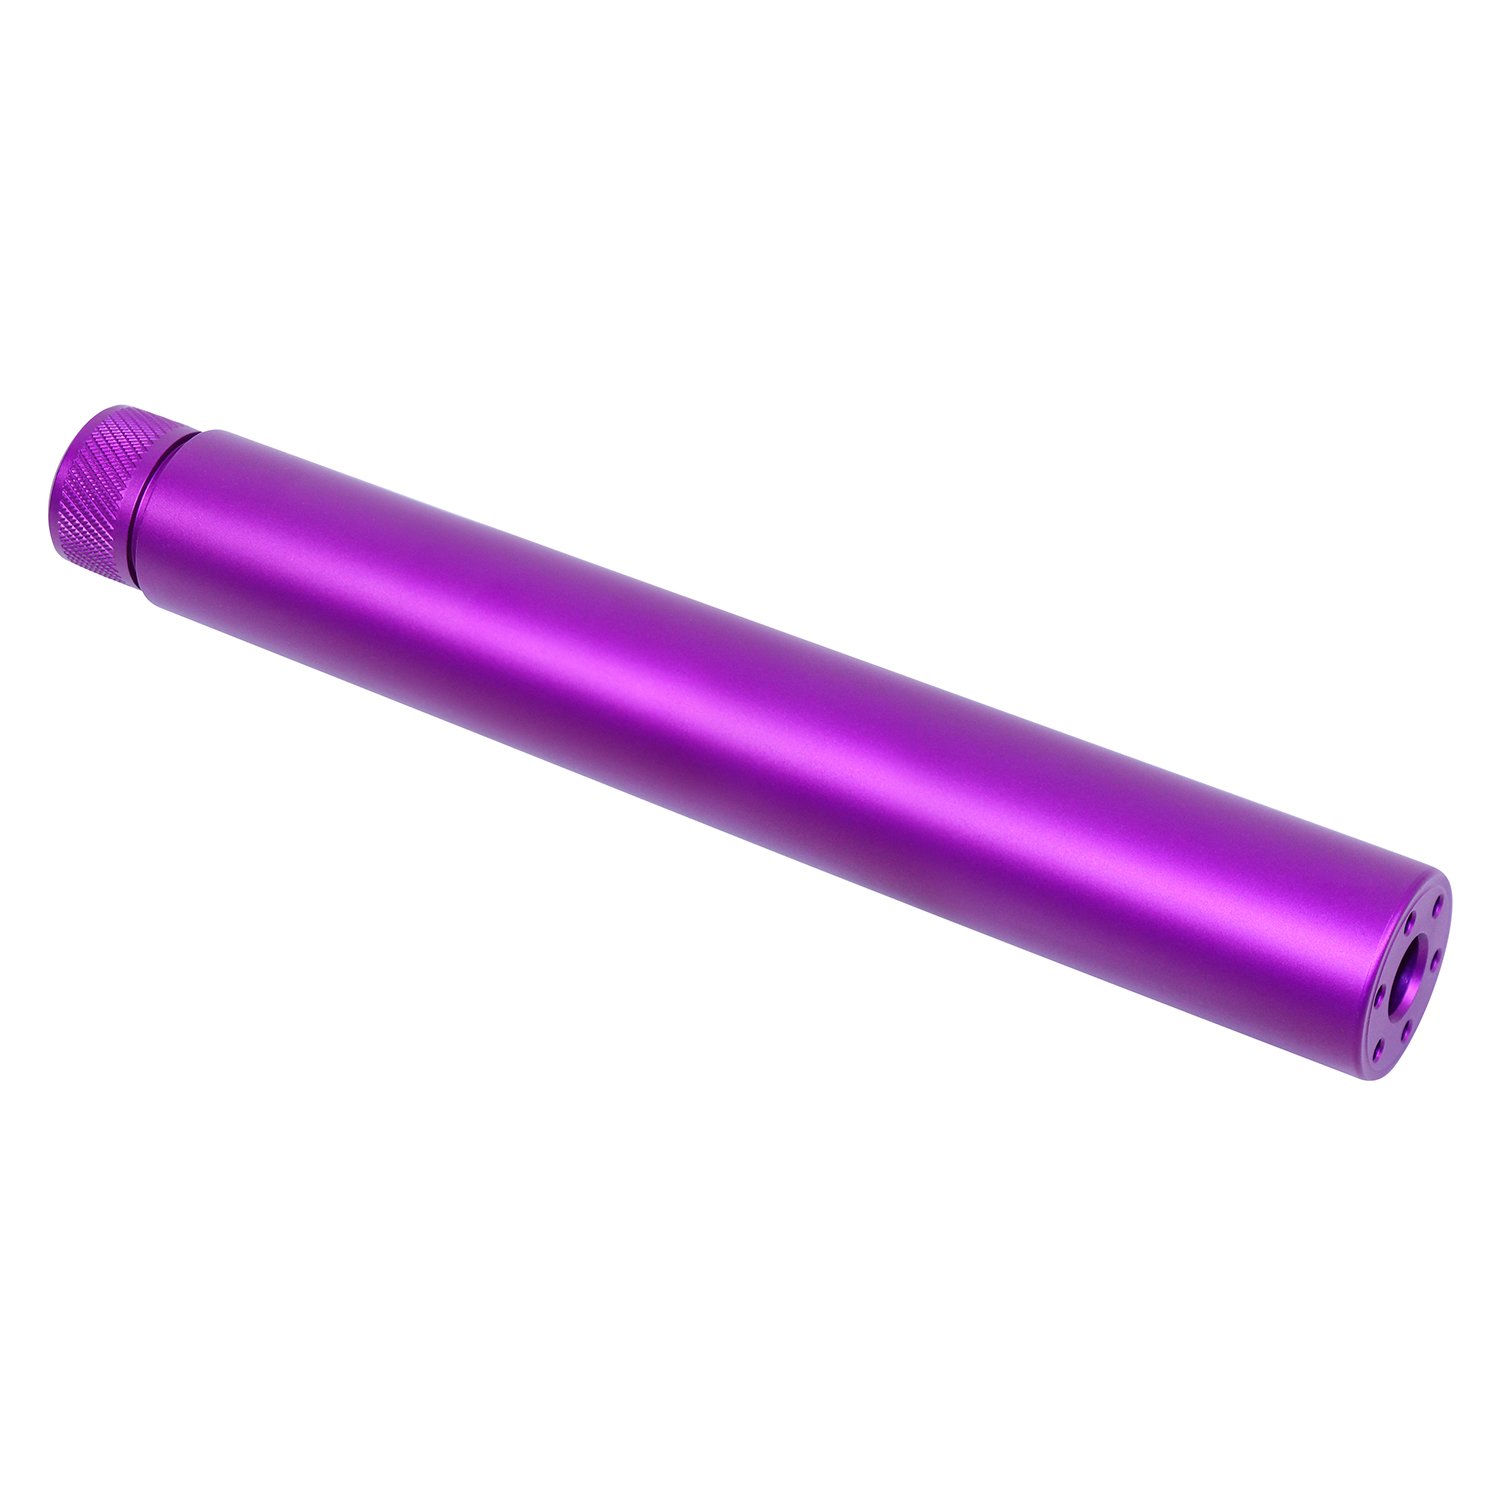 Metallic purple anodized 9-inch fake suppressor for AR-15